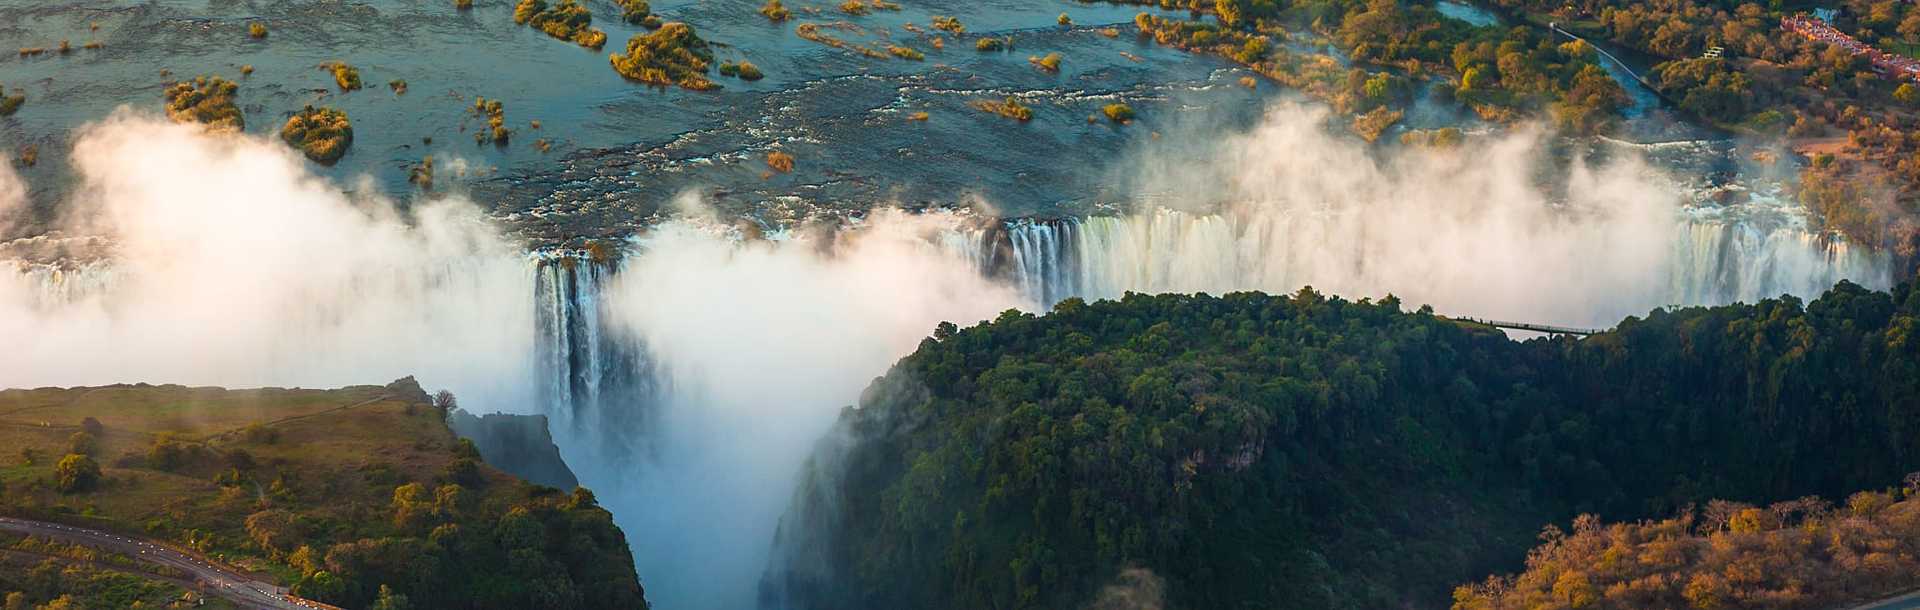 Ariel view of Victoria Falls, Zimbabwe